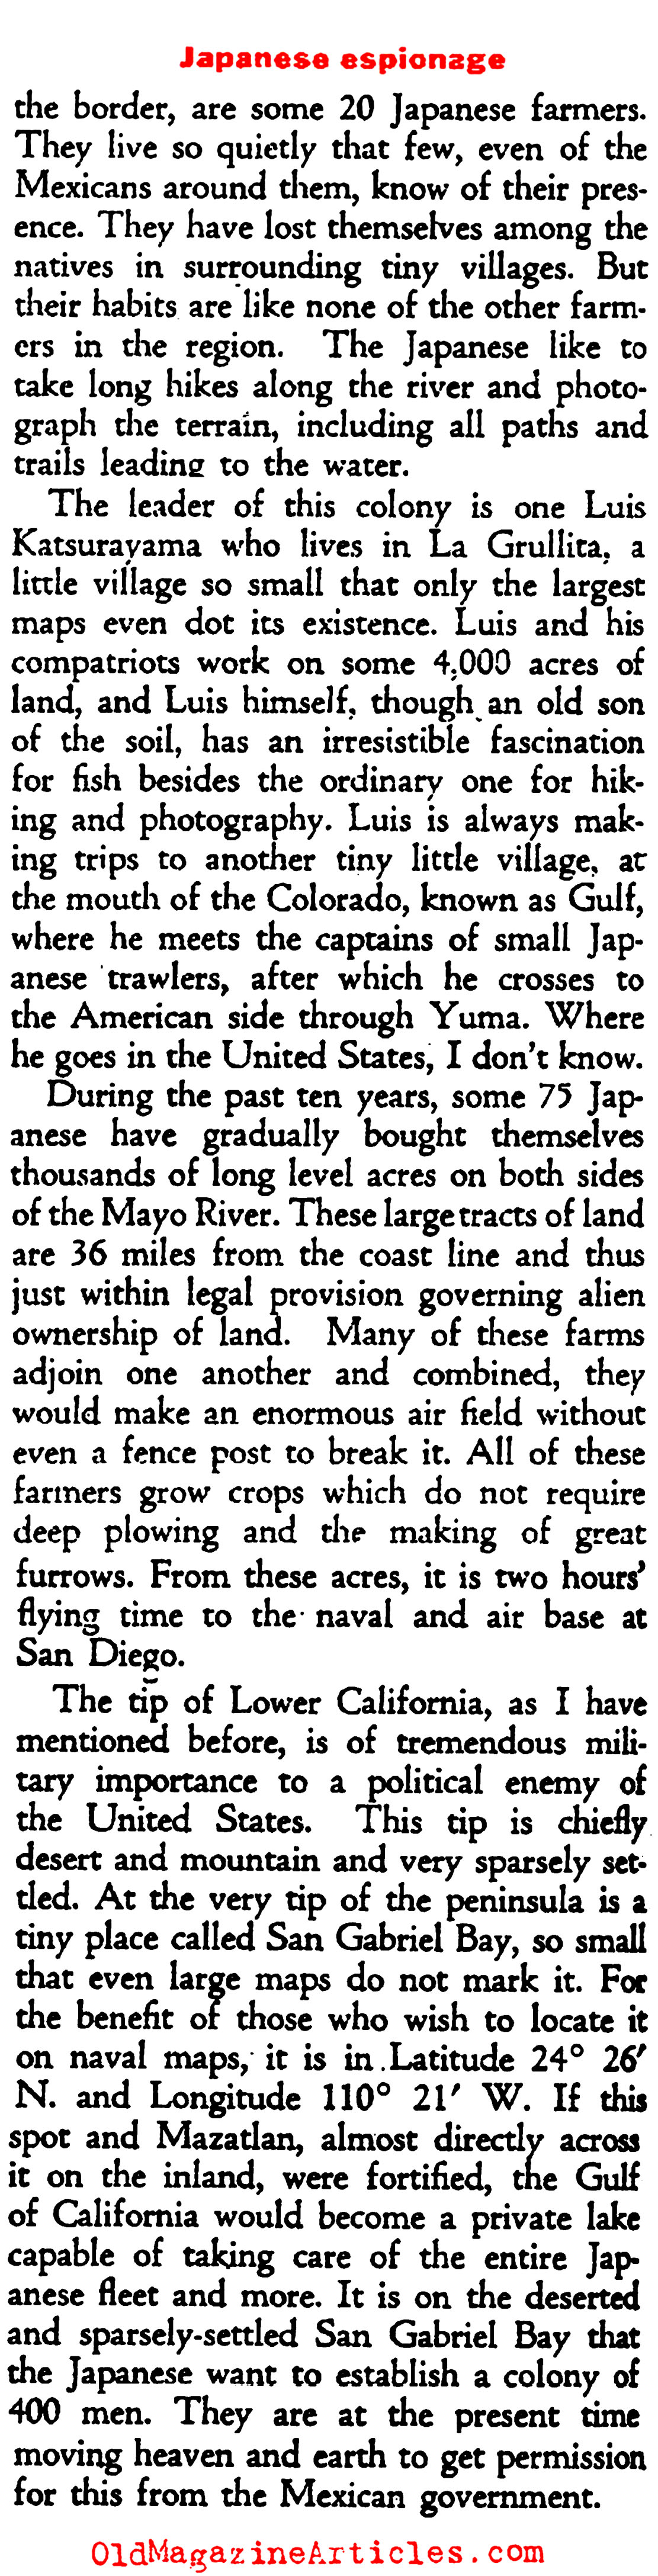 Japanese Spies on the West-Coast (Ken Magazine, 1939)